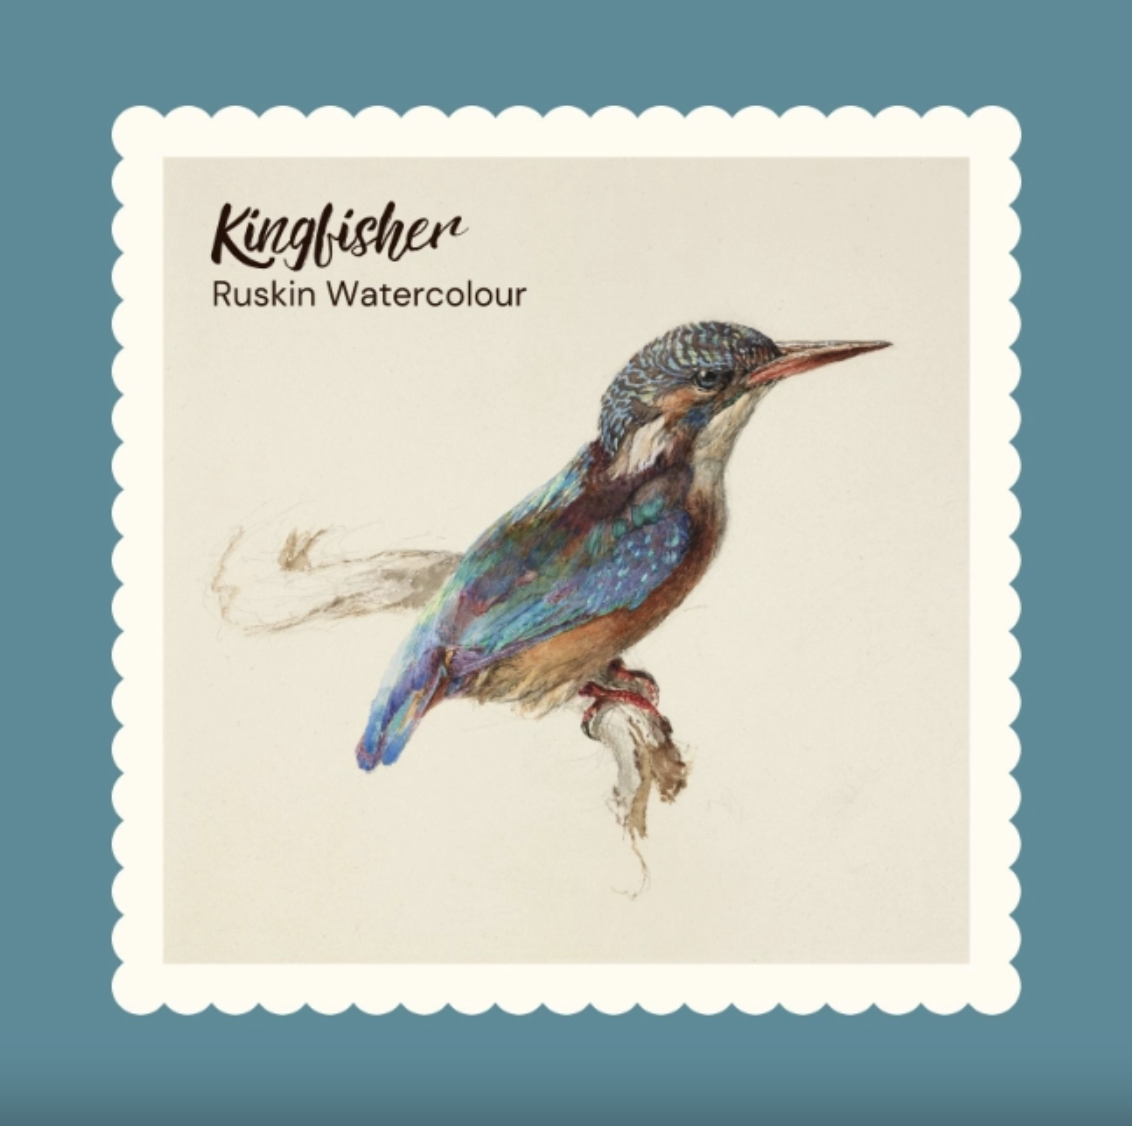 Graphenstone's Kingfisher Blue